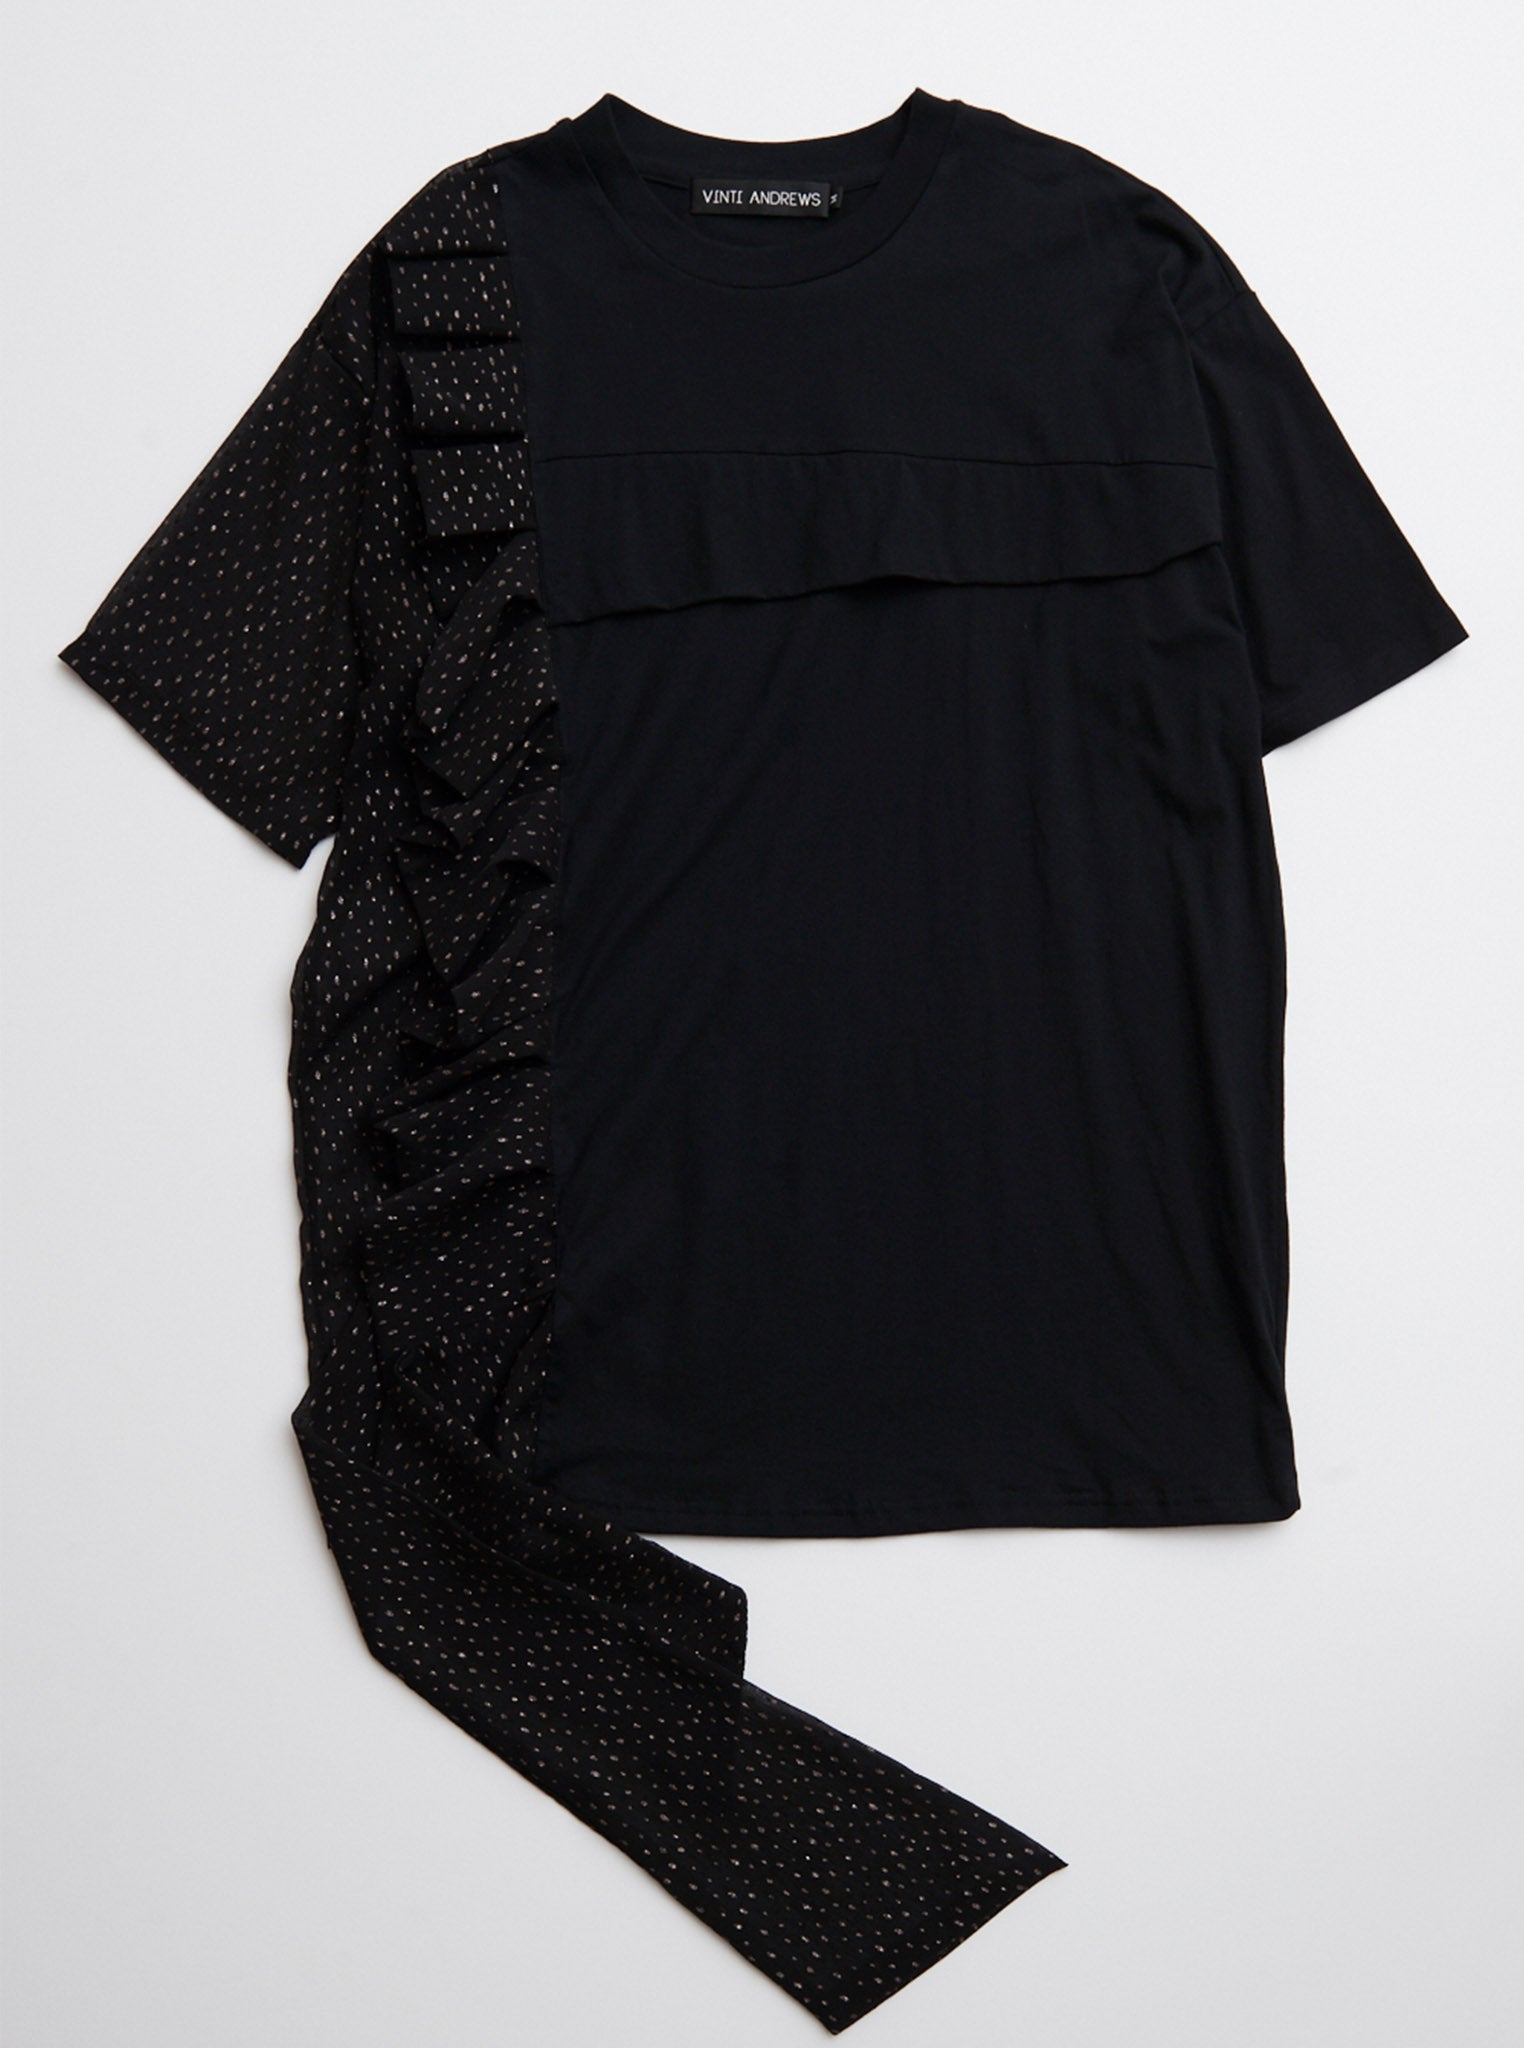 Vinti Andrews Frill T-Shirt Dress Black